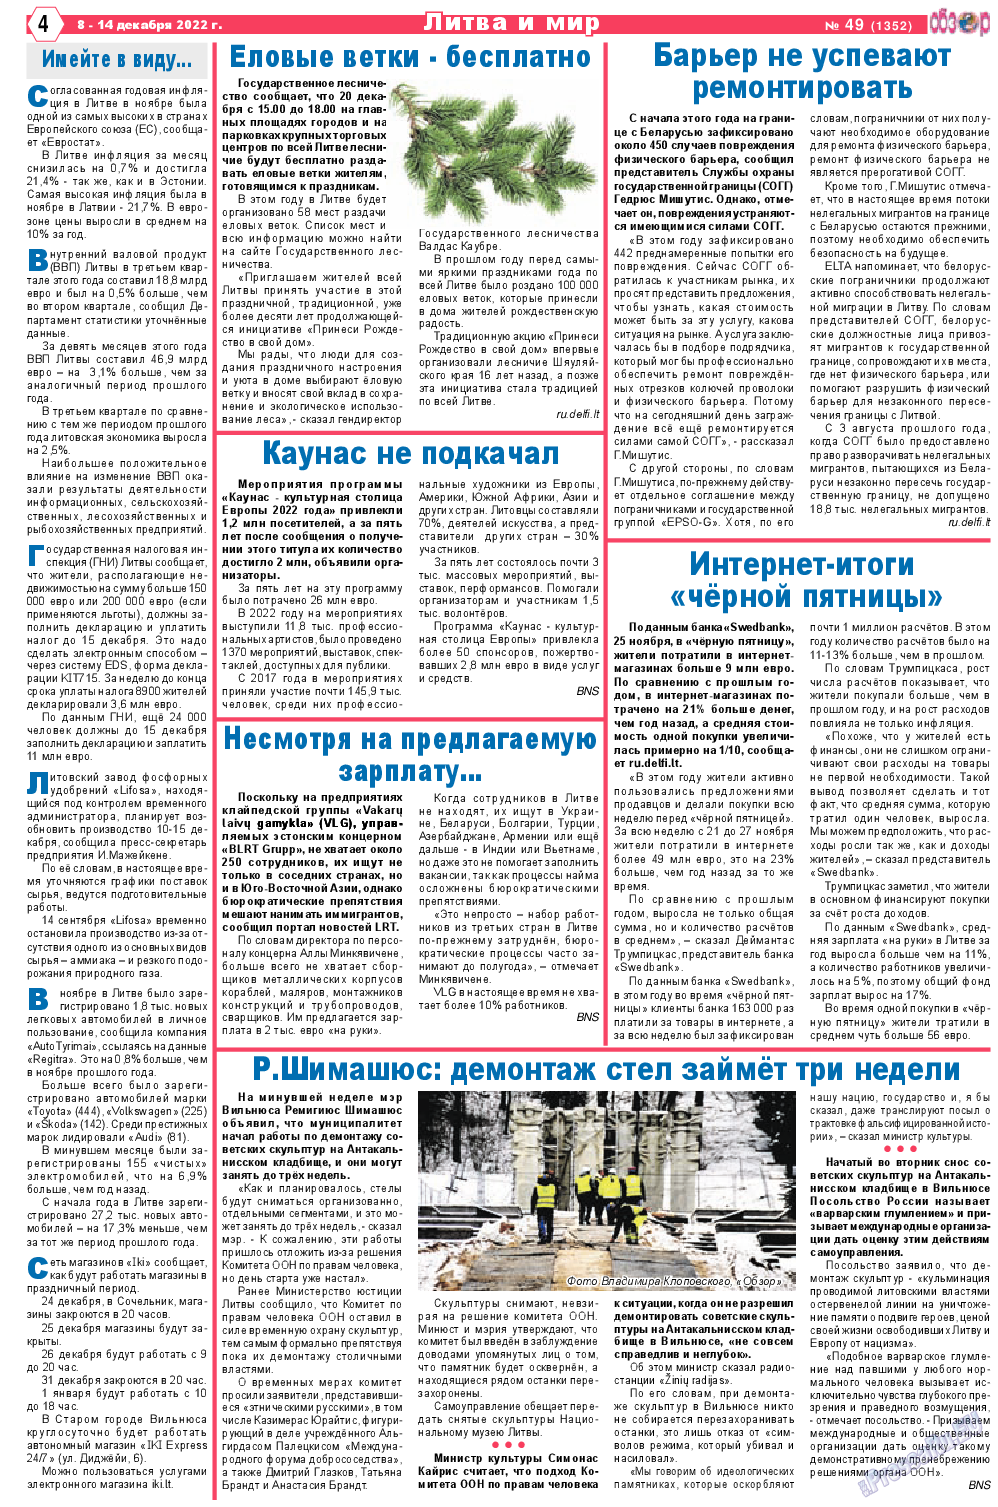 Обзор (газета). 2022 год, номер 49, стр. 4